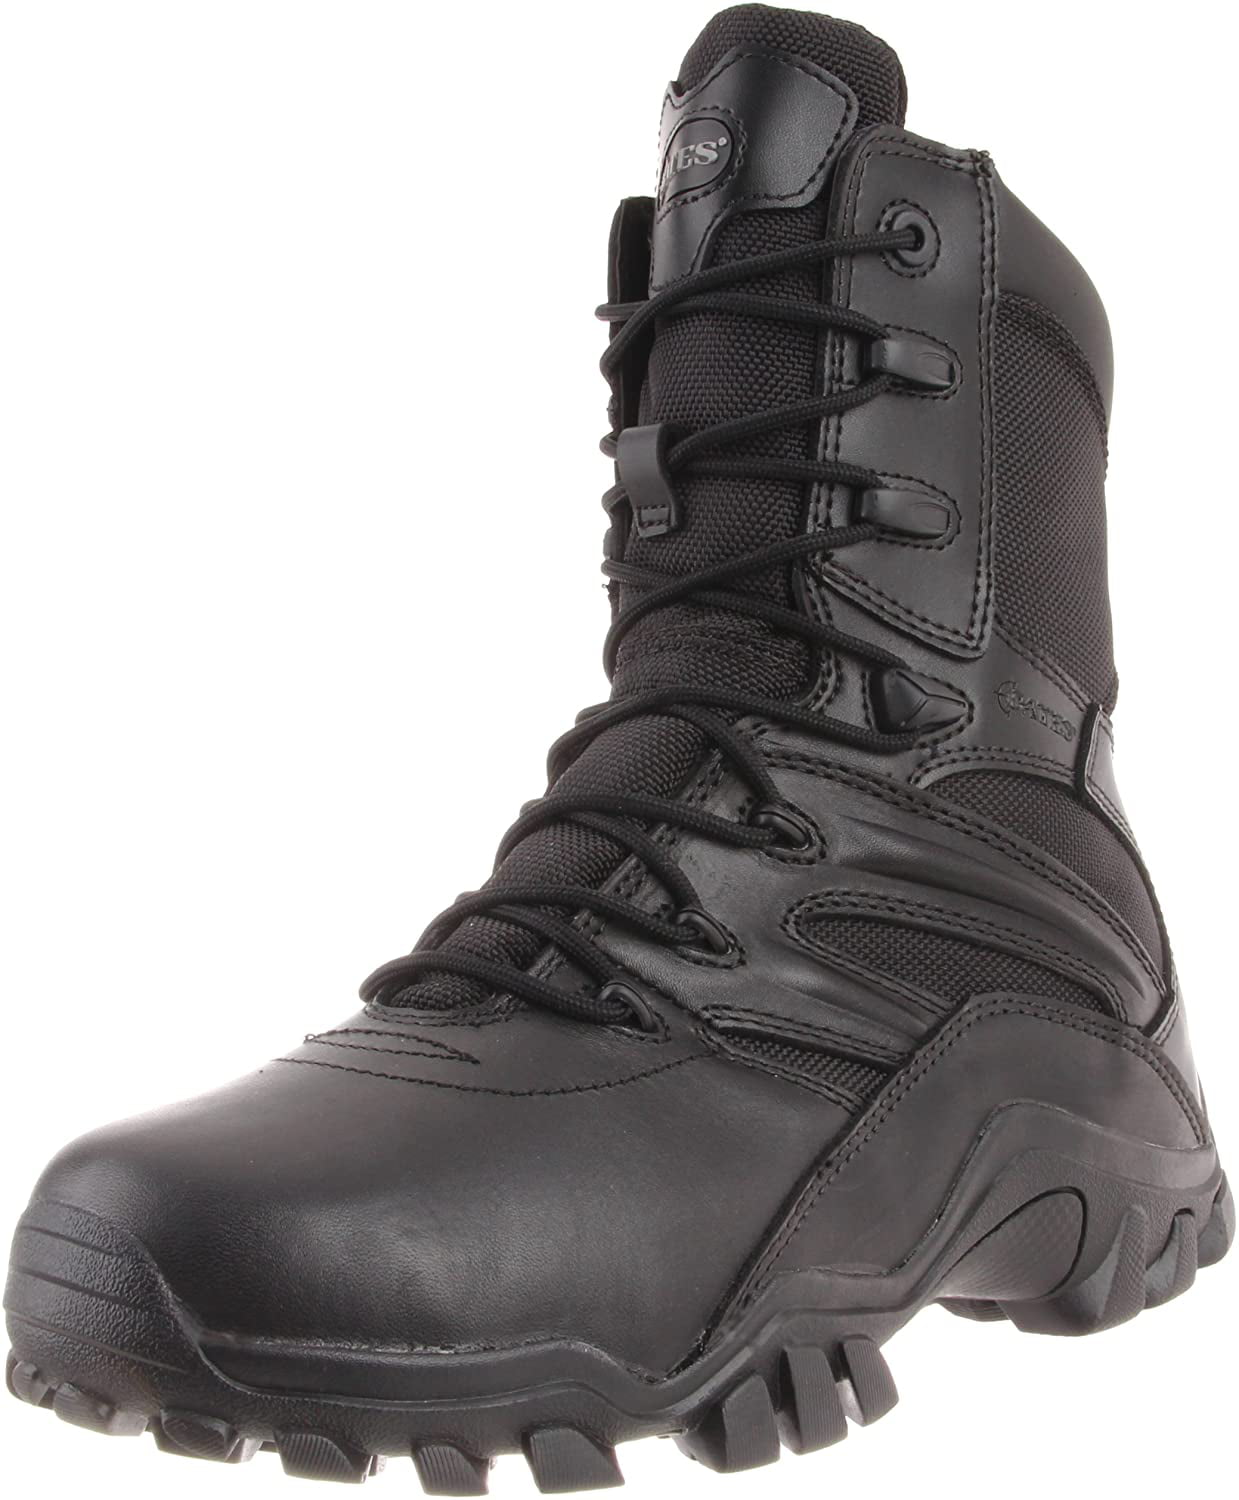 bates delta 8 side zip boots